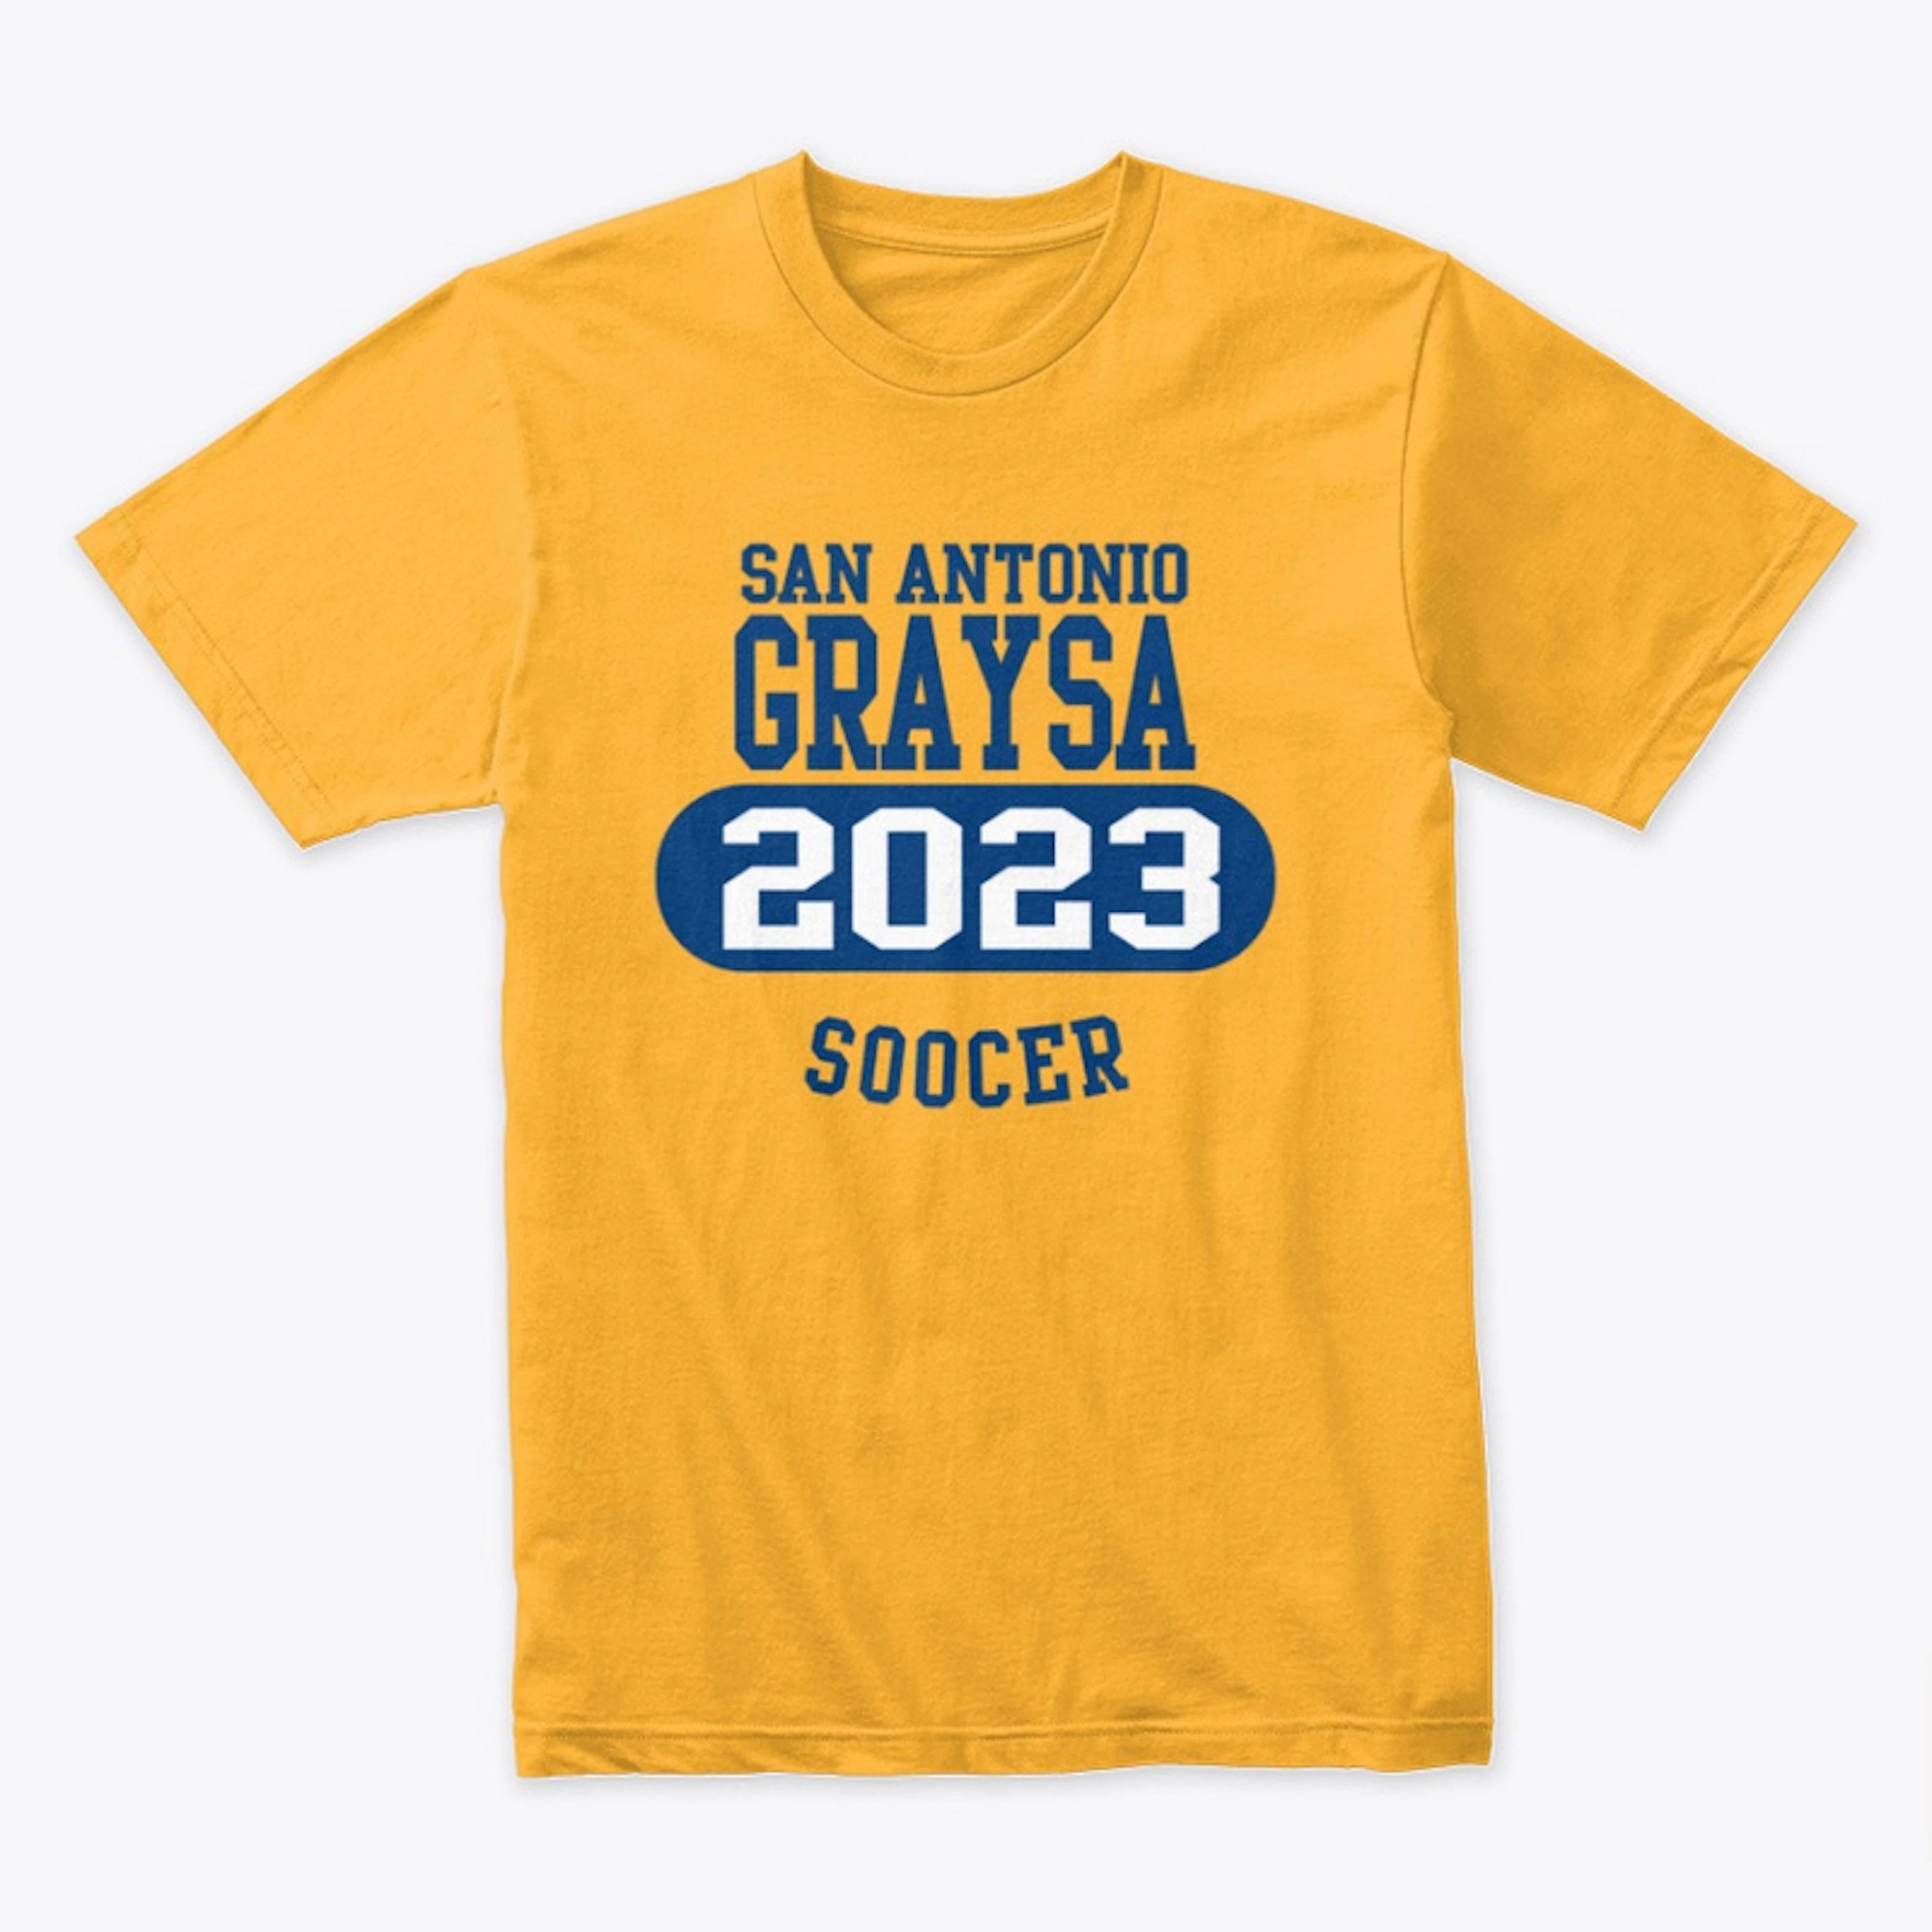 GraySA 2023